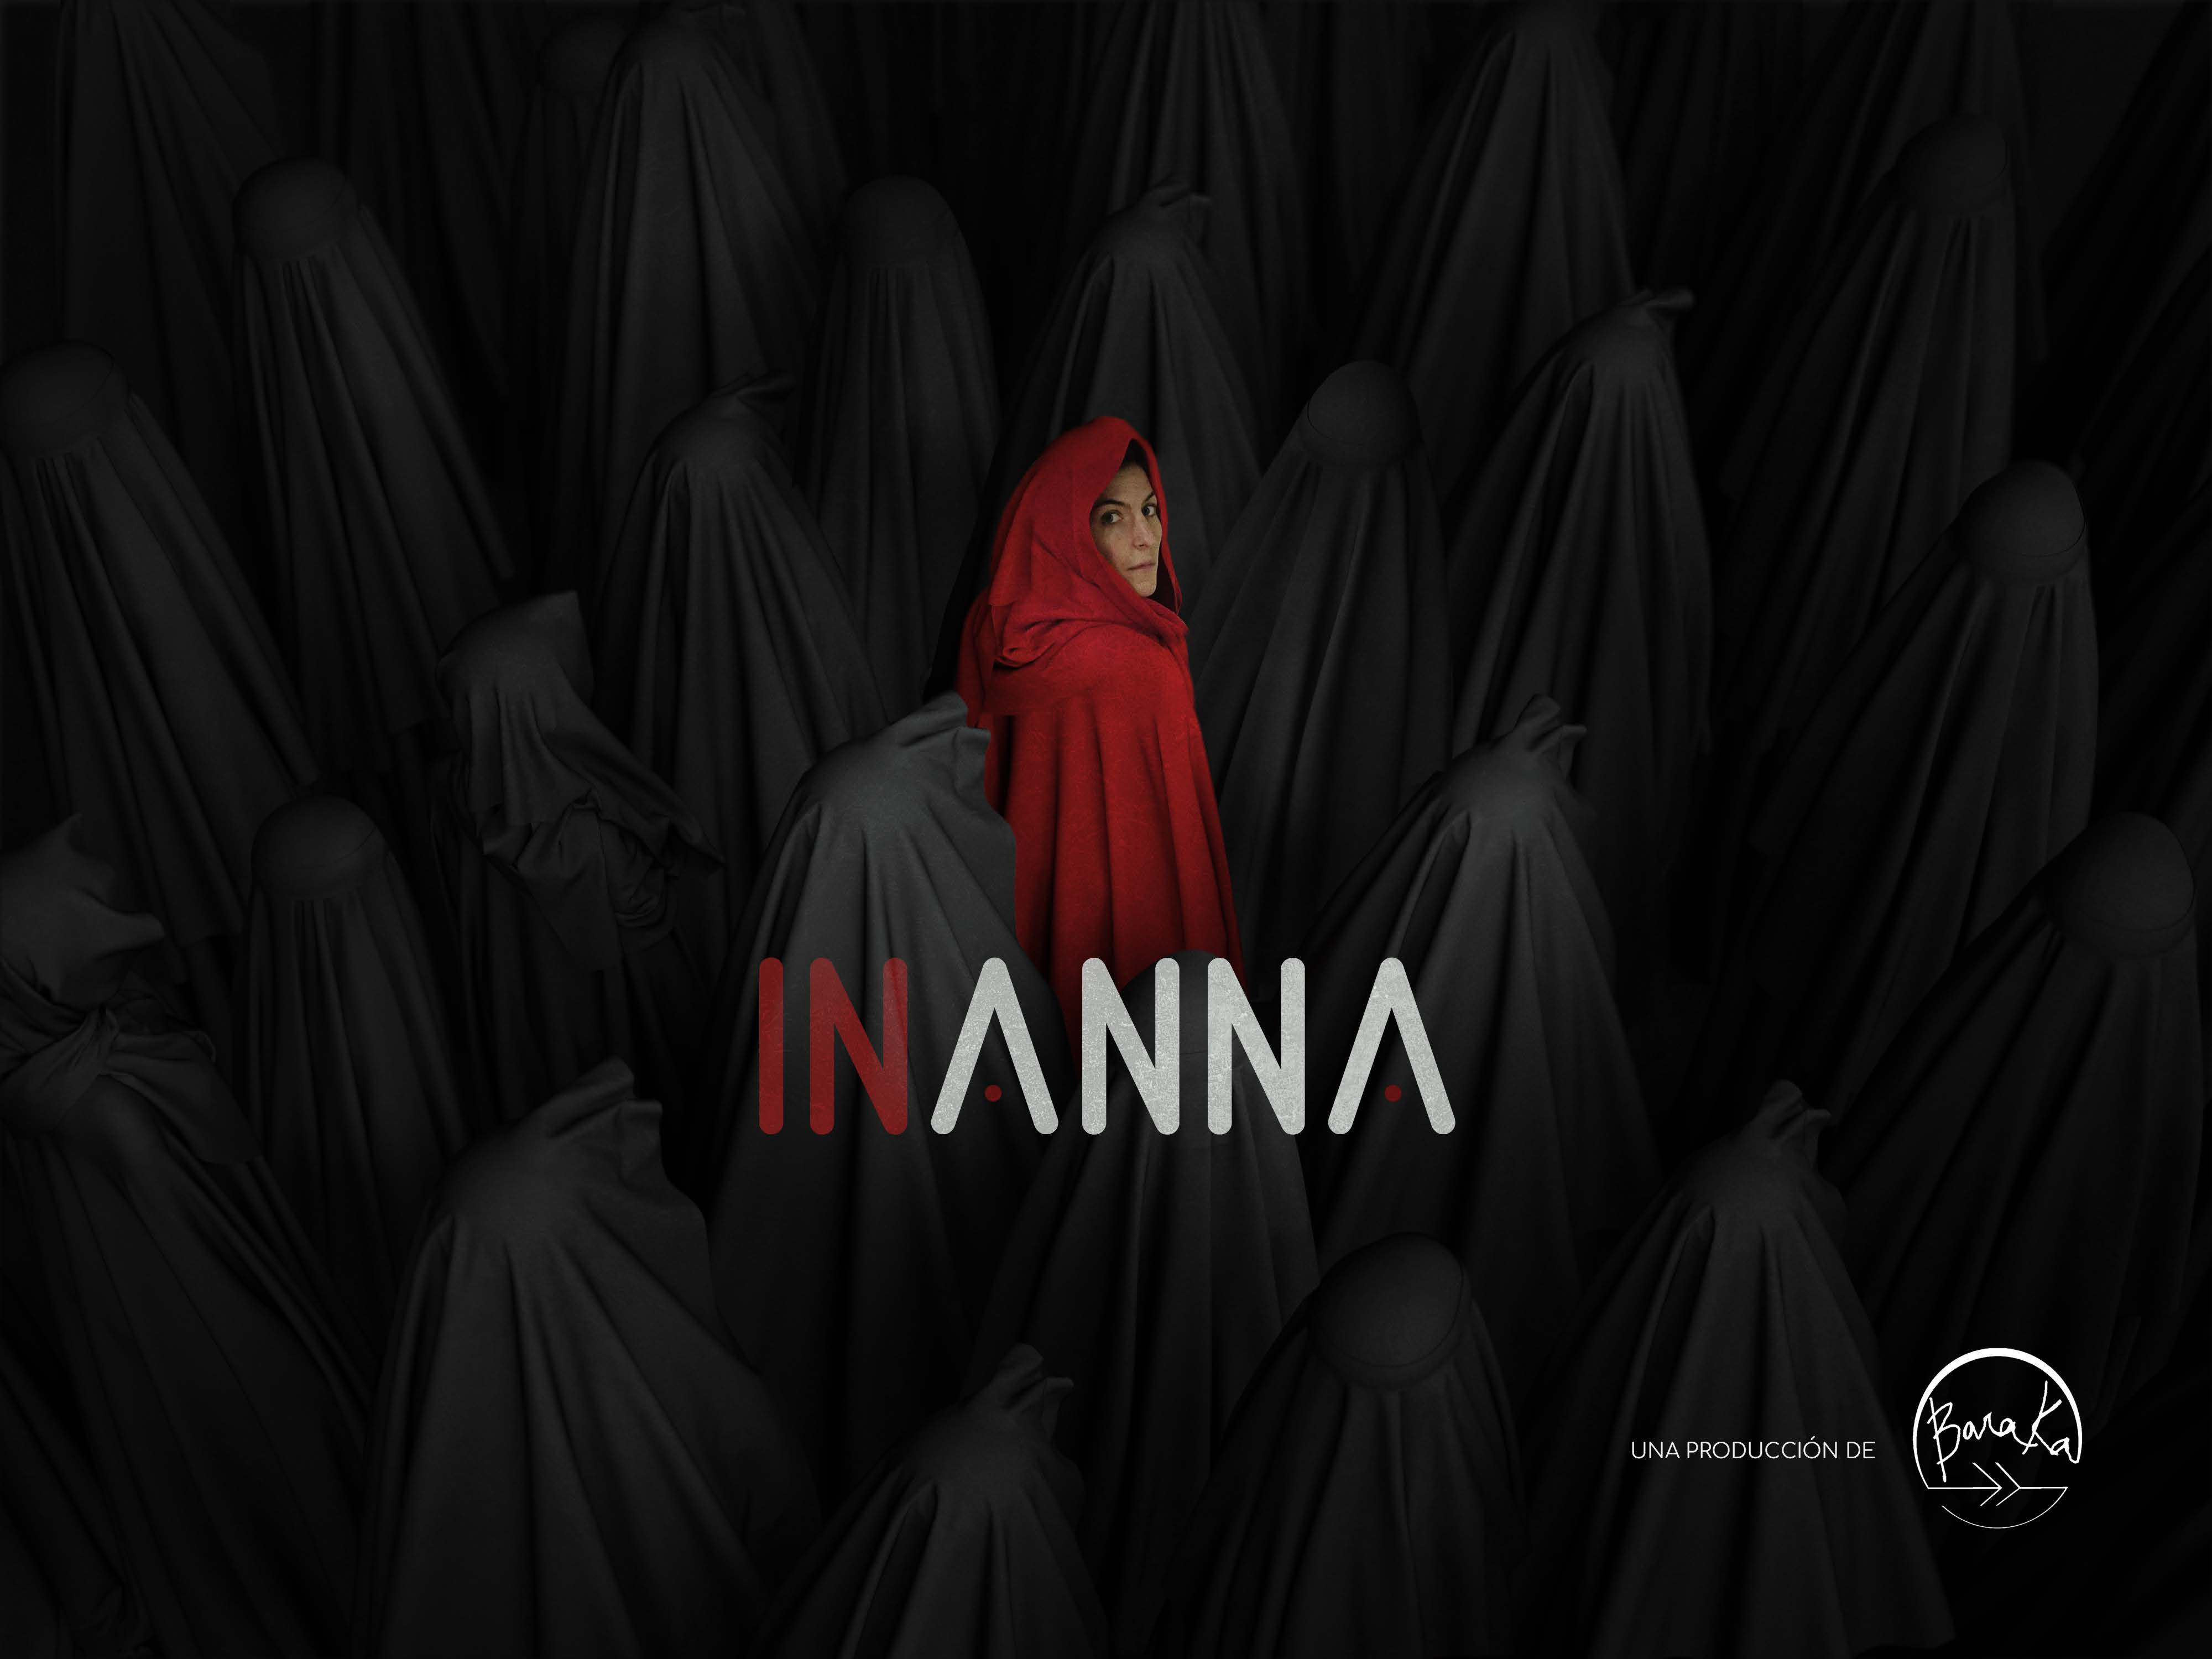 Cartel promocional de la obra de teatro InAnna de Teatro Baraka.